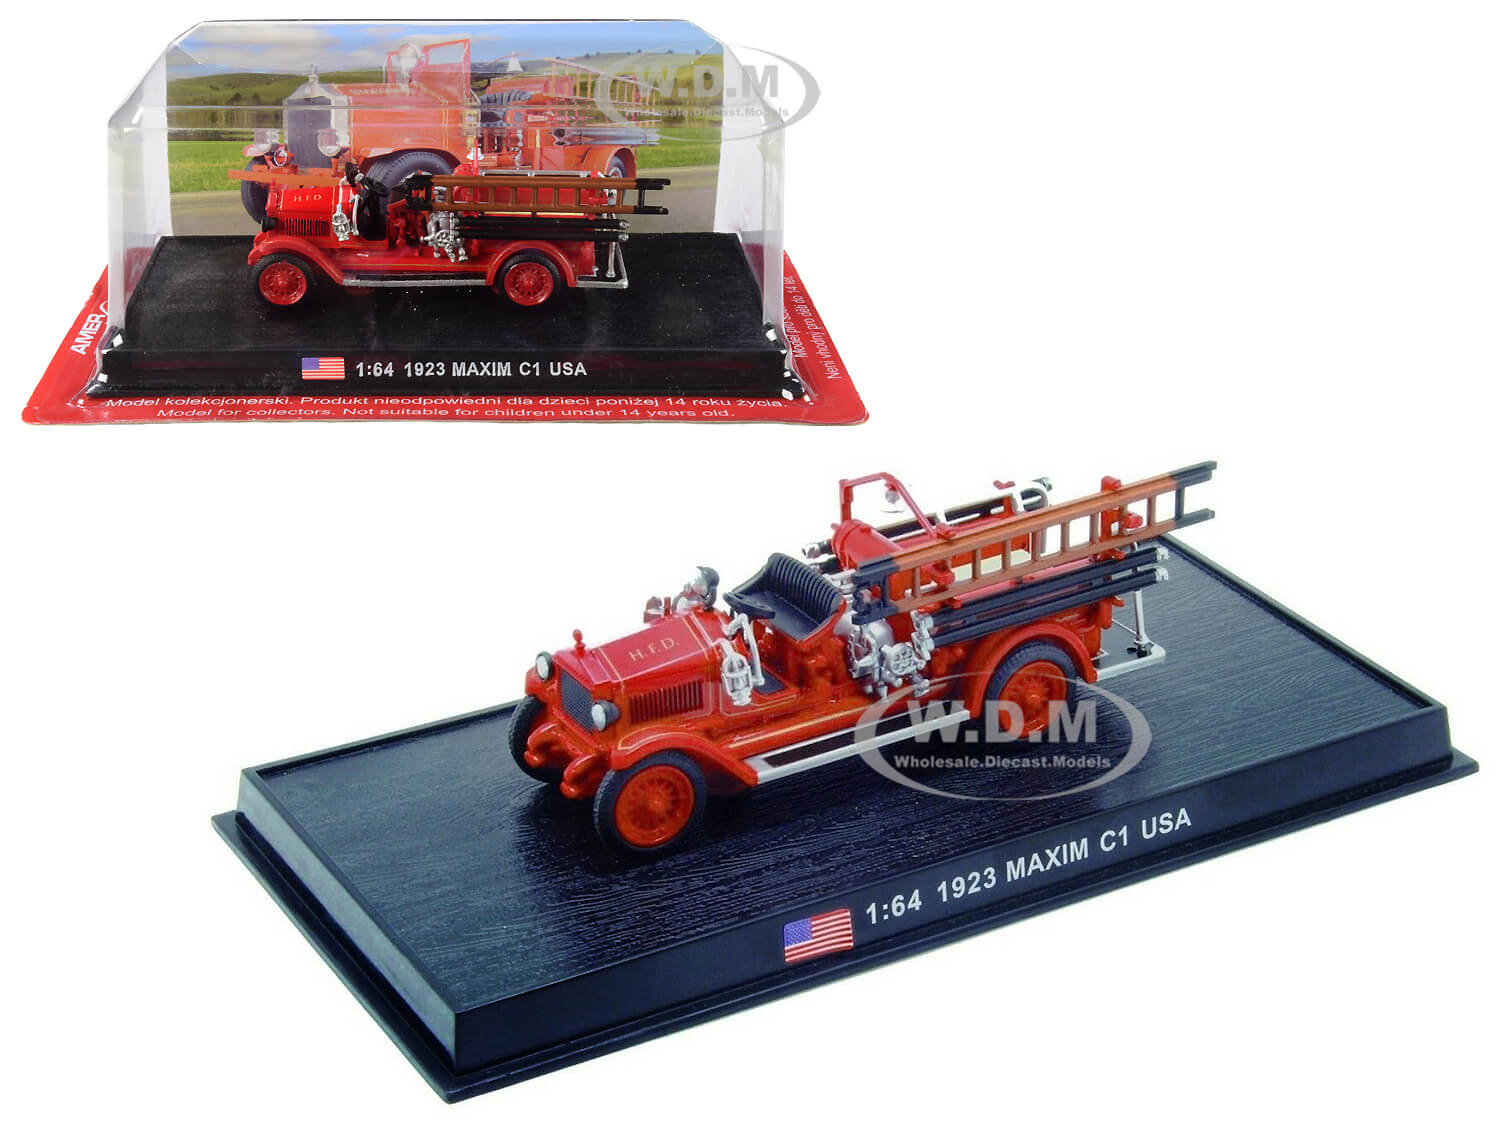 1923 Maxim C1 Fire Engine Red Houston Fire Department (H.F.D.) (Houston Texas) 1/64 Diecast Model by Amercom